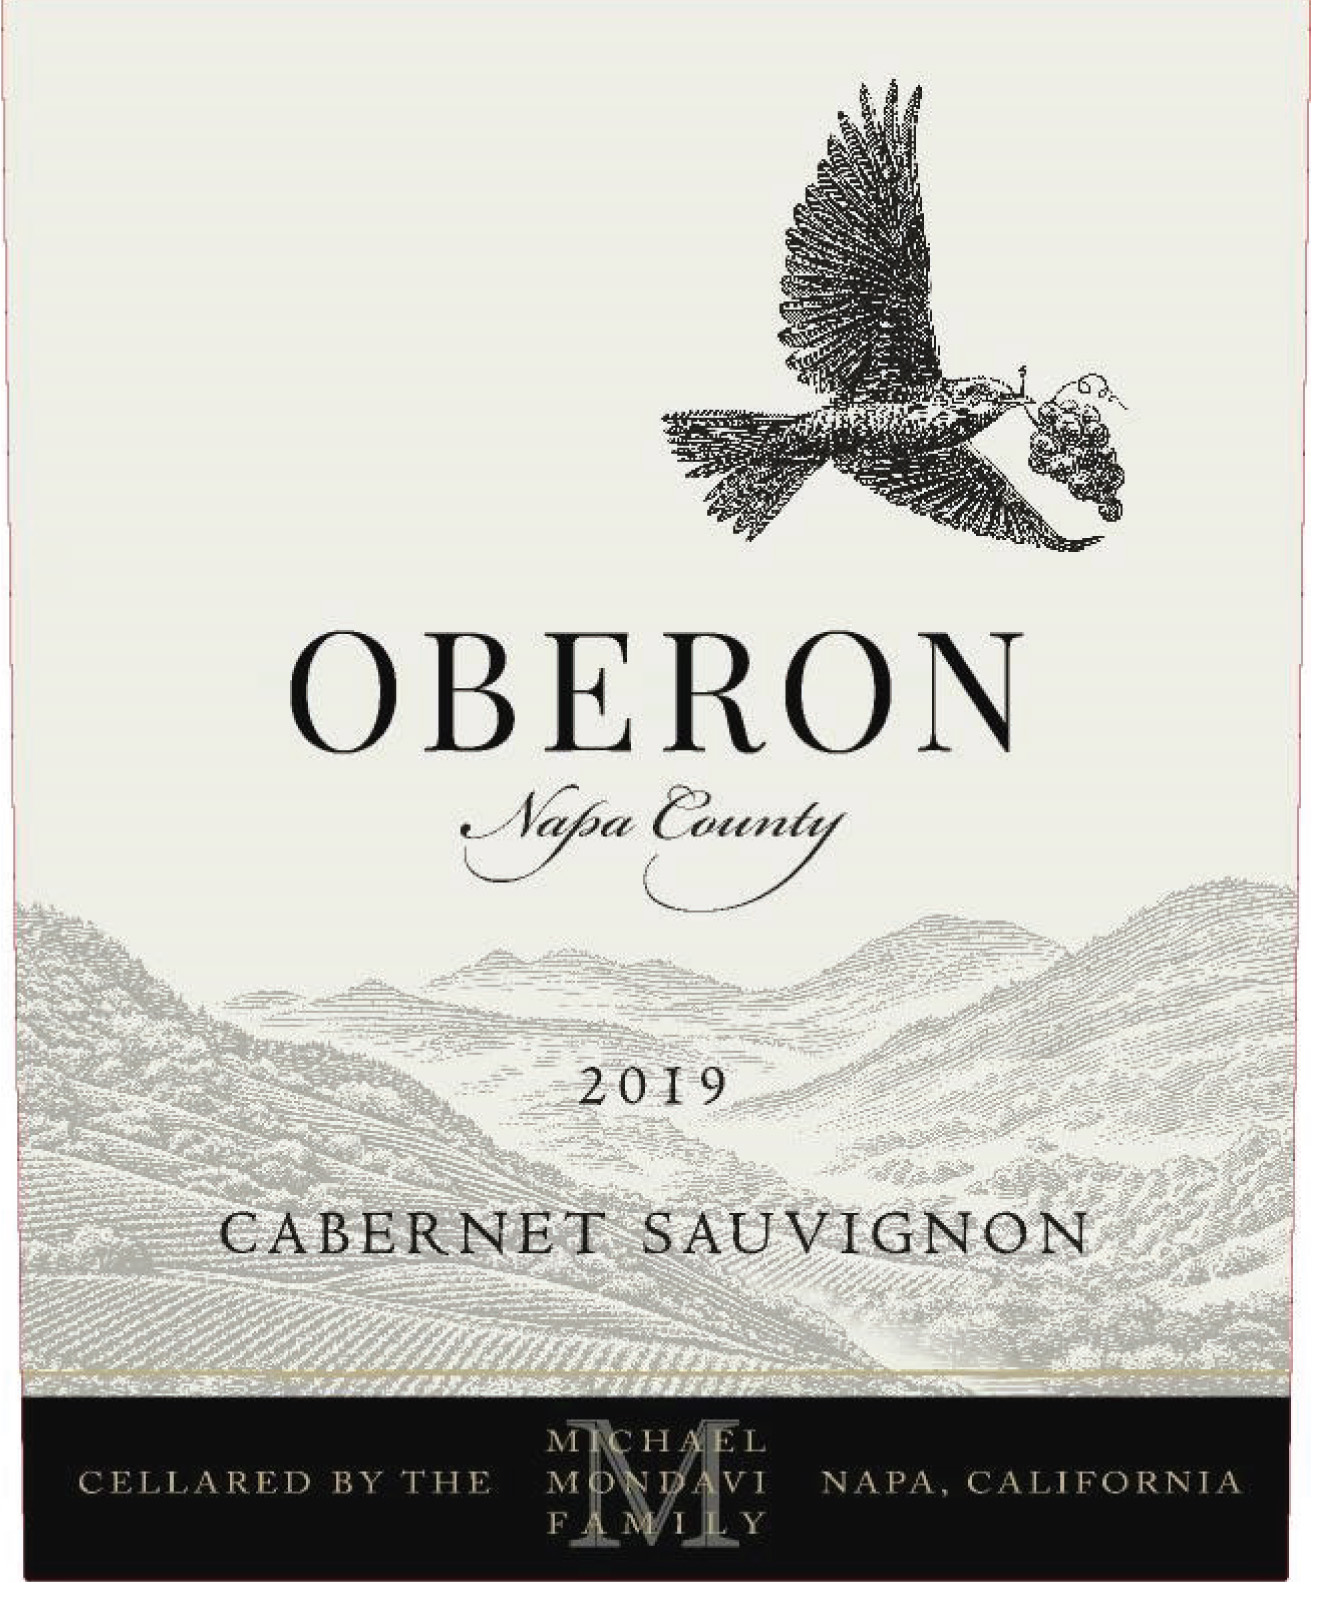 Oberon - Cabernet Sauvignon label